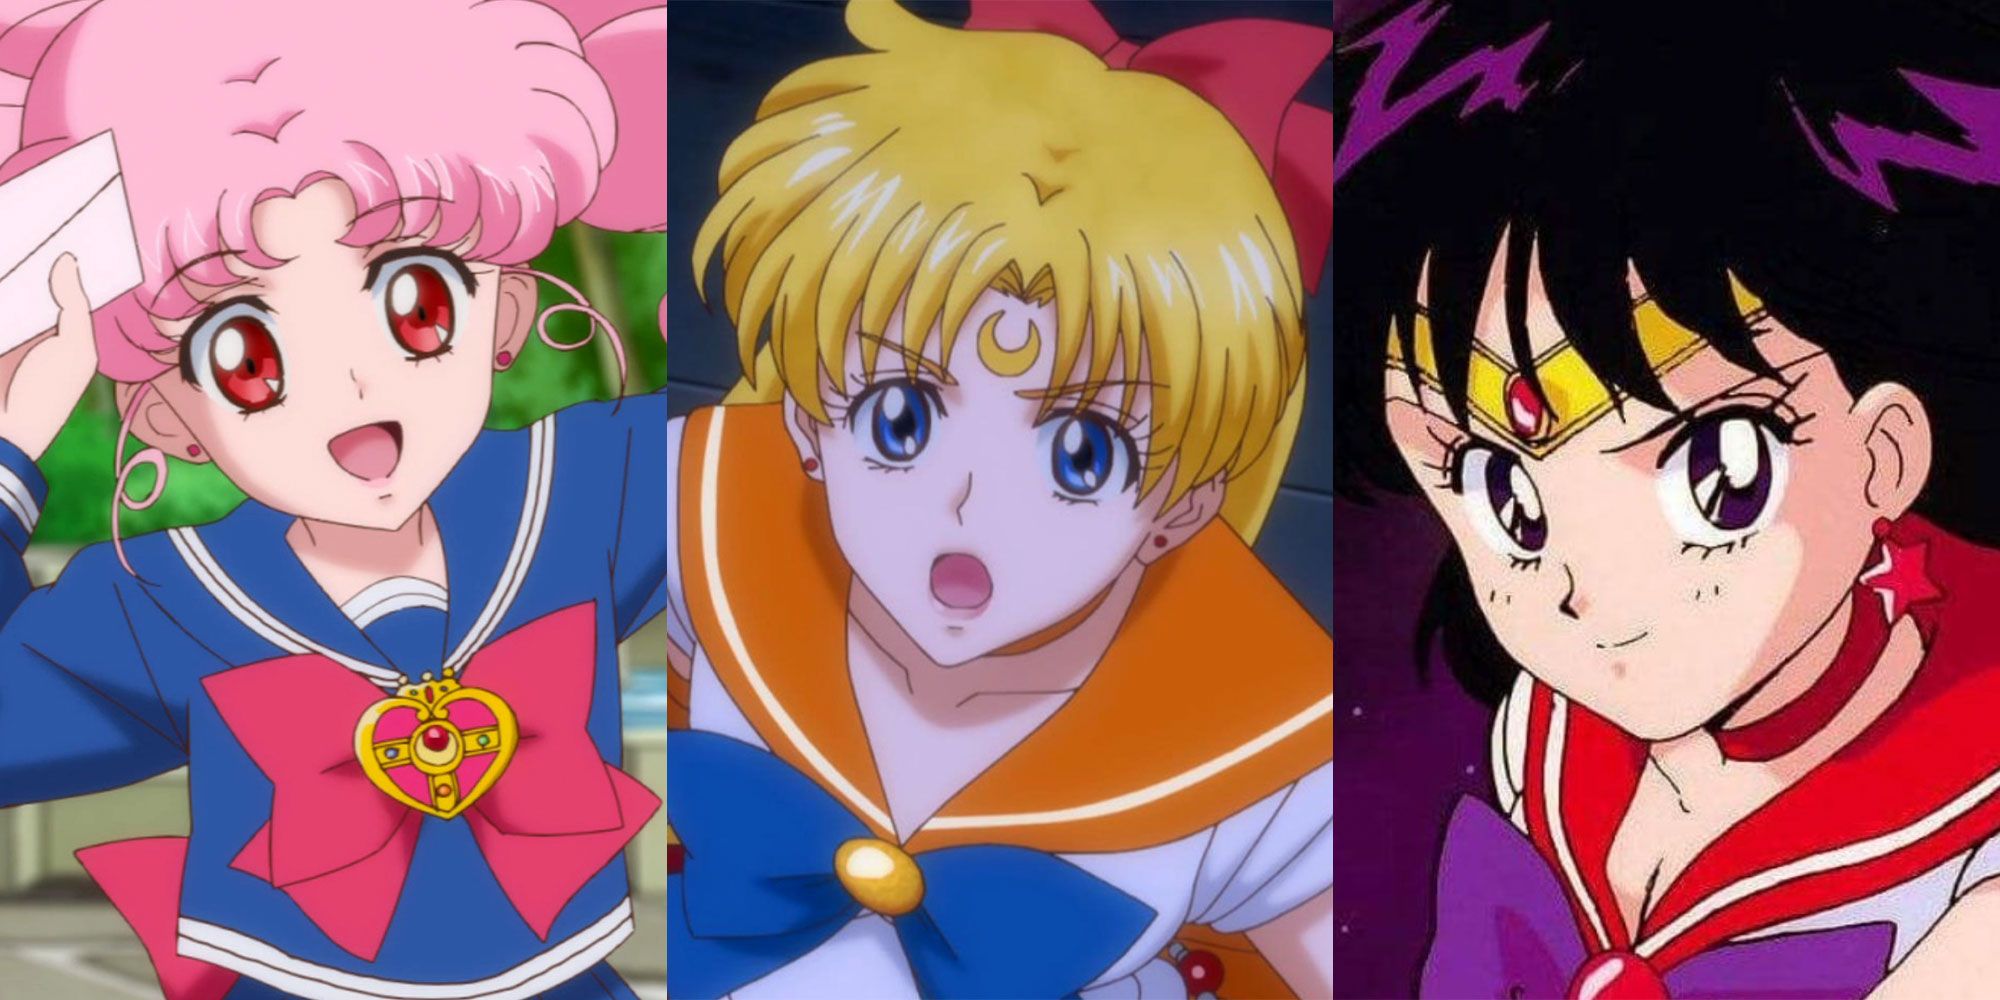 6. Sailor Mercury from Sailor Moon - wide 5